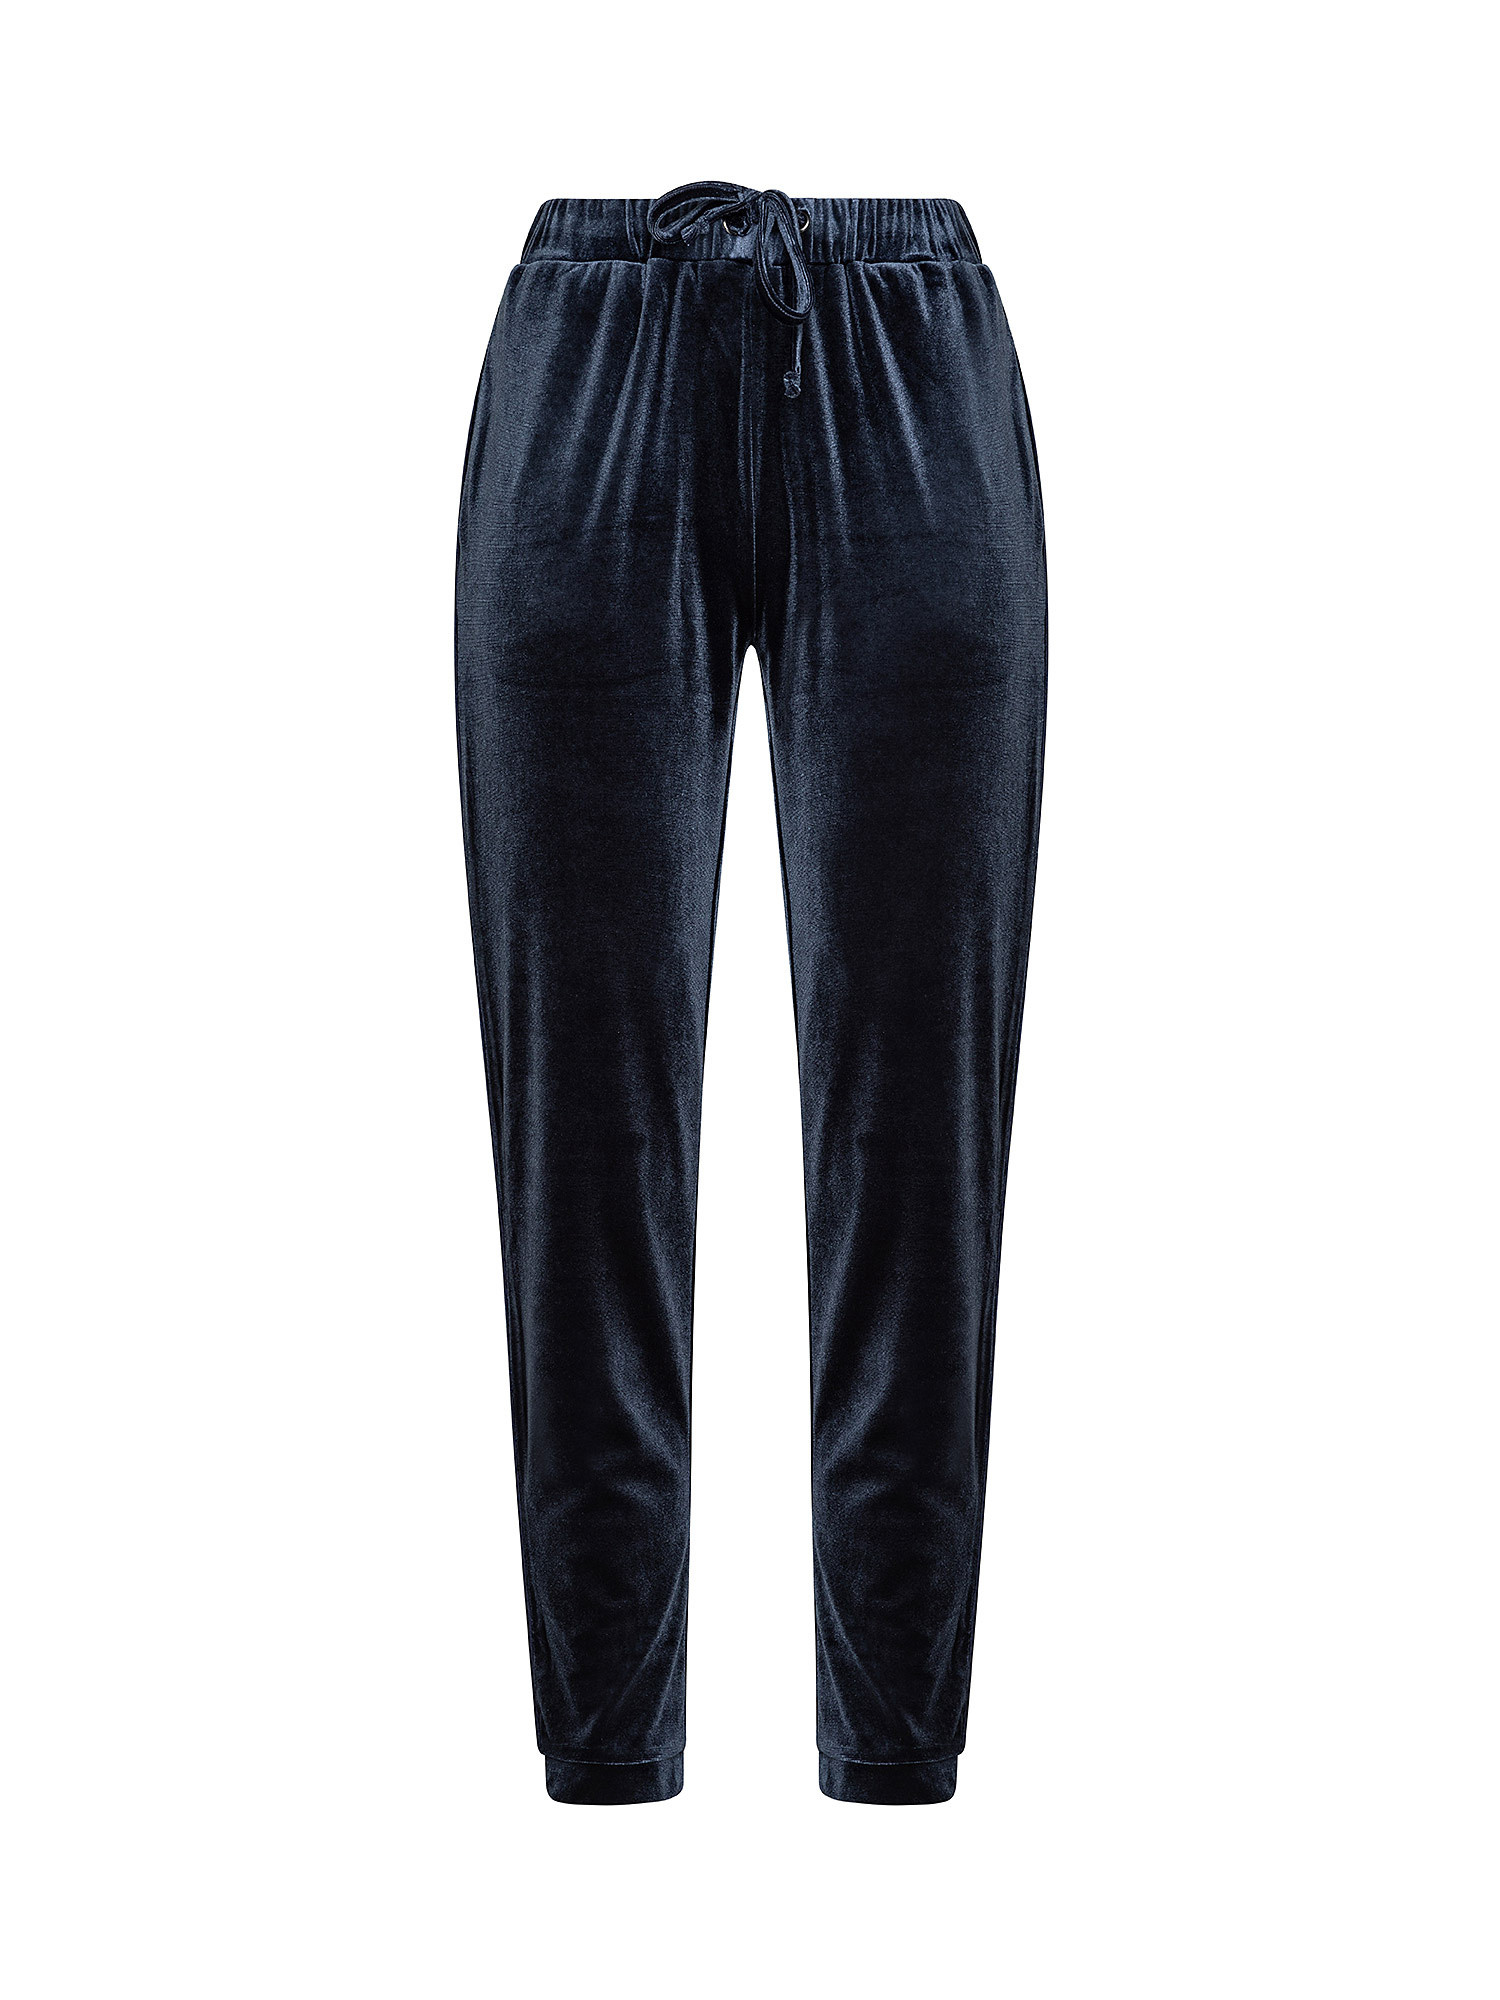 pantalone in ciniglia, Blu, large image number 0